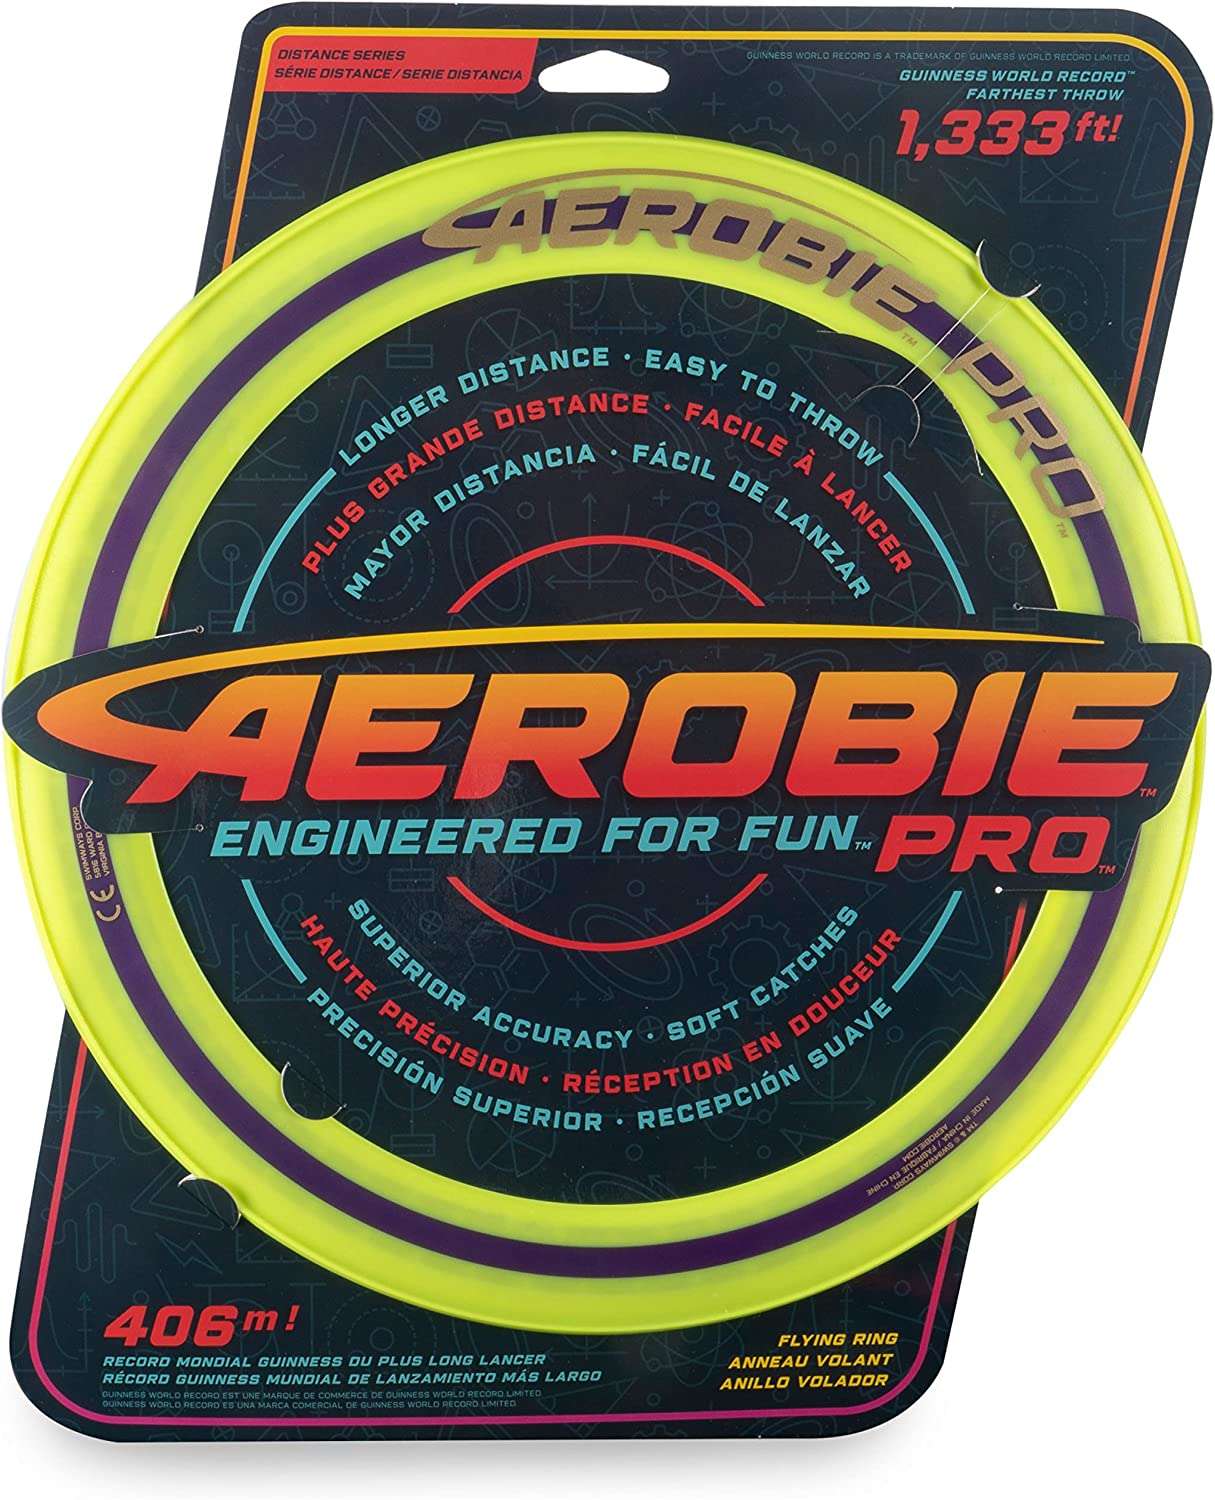 Obrcz do rzucania Aerobie Pro frisbee te Spin Master